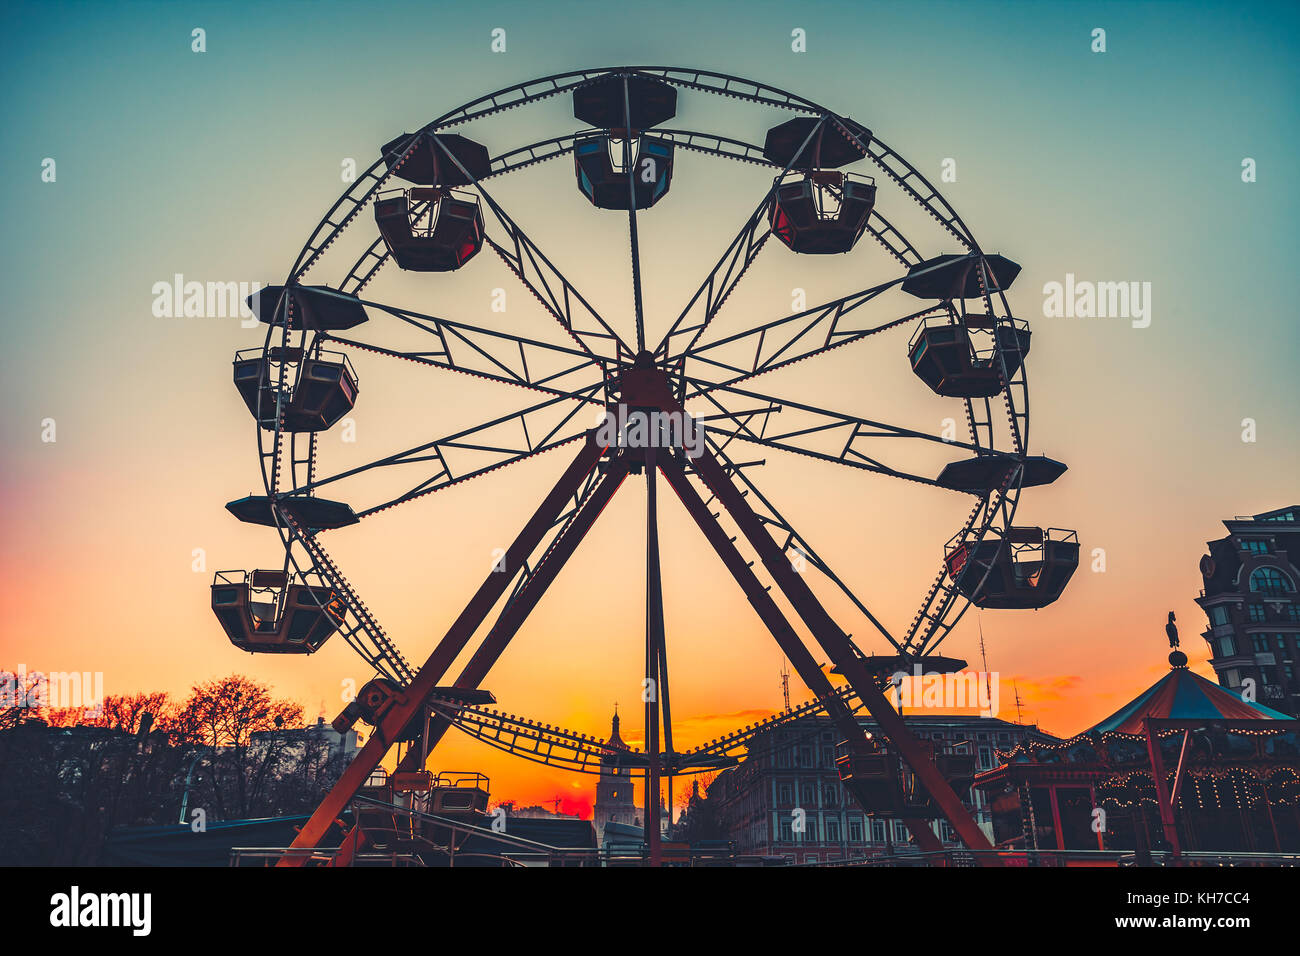 Riesenrad bei Sonnenuntergang - beliebter Park Attraktion Stockfoto